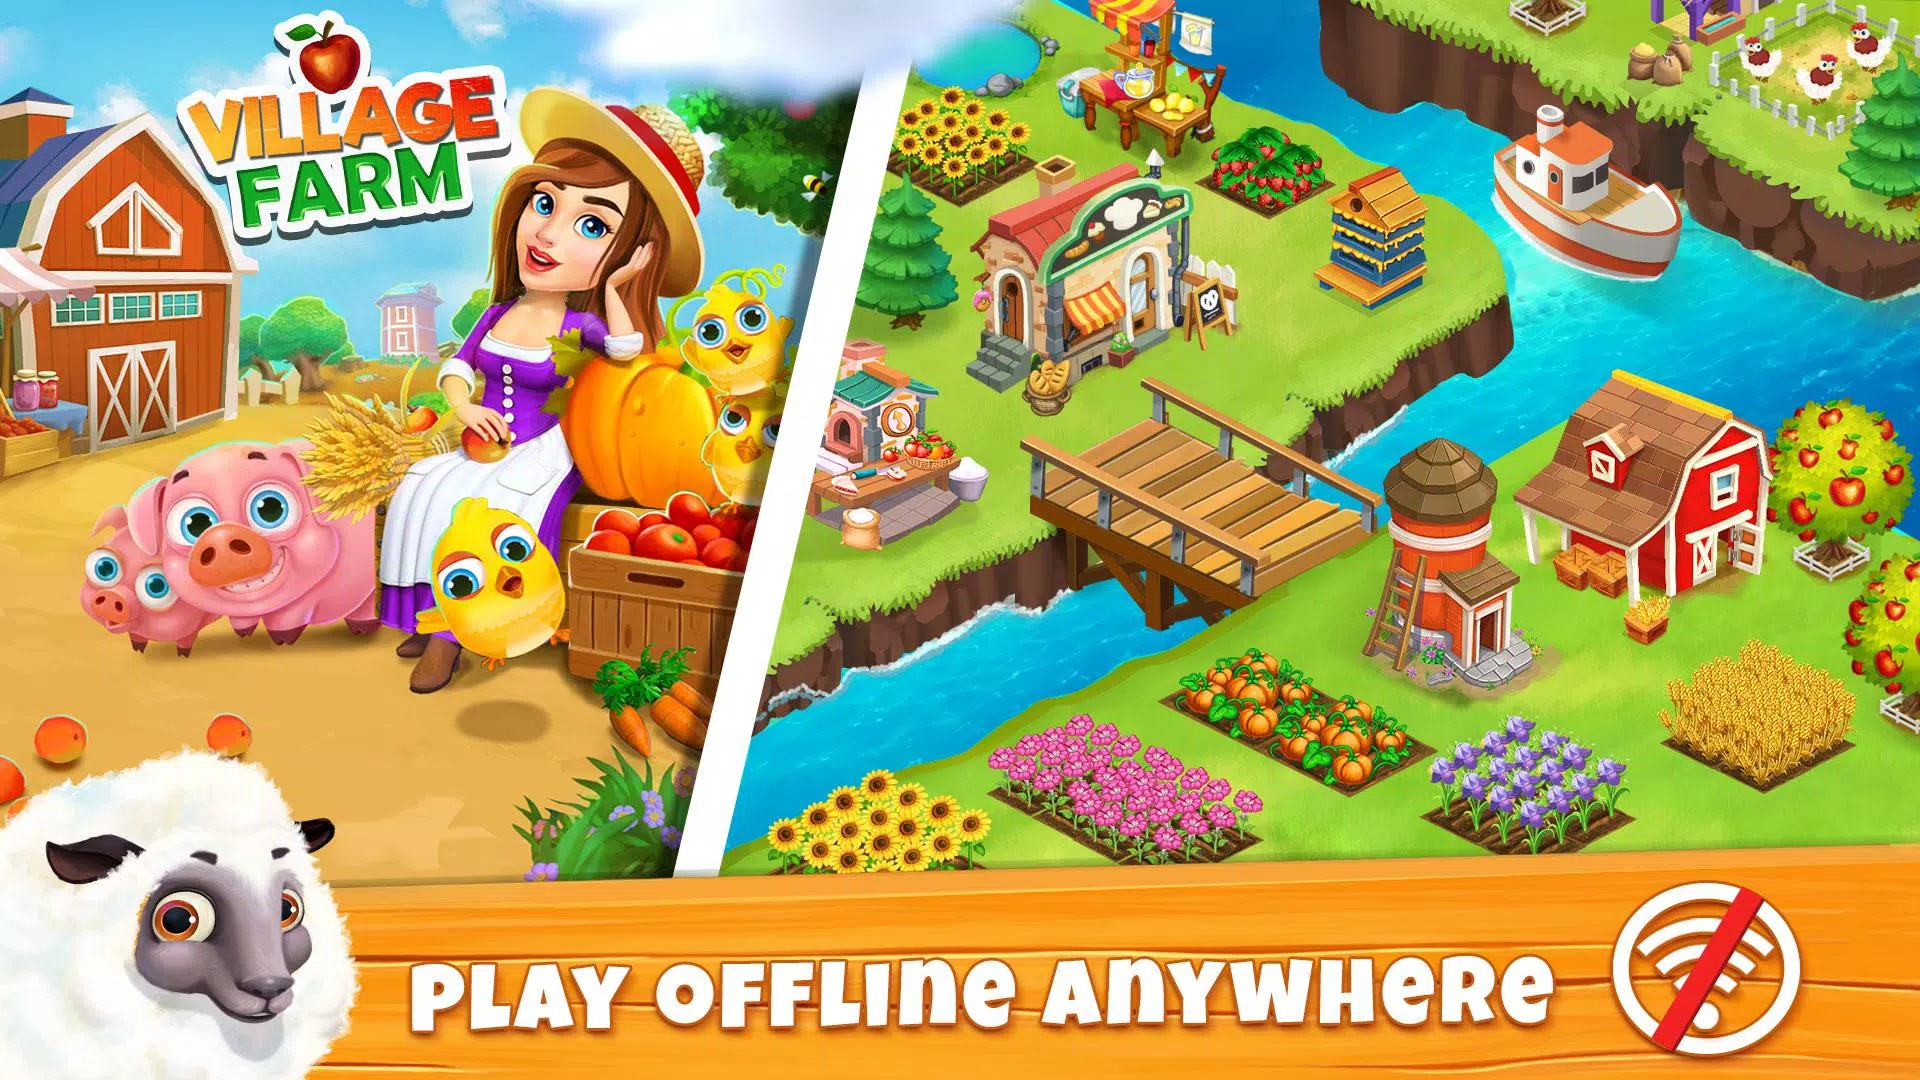 Village Farm Free Offline Farm Games APK for Android Download